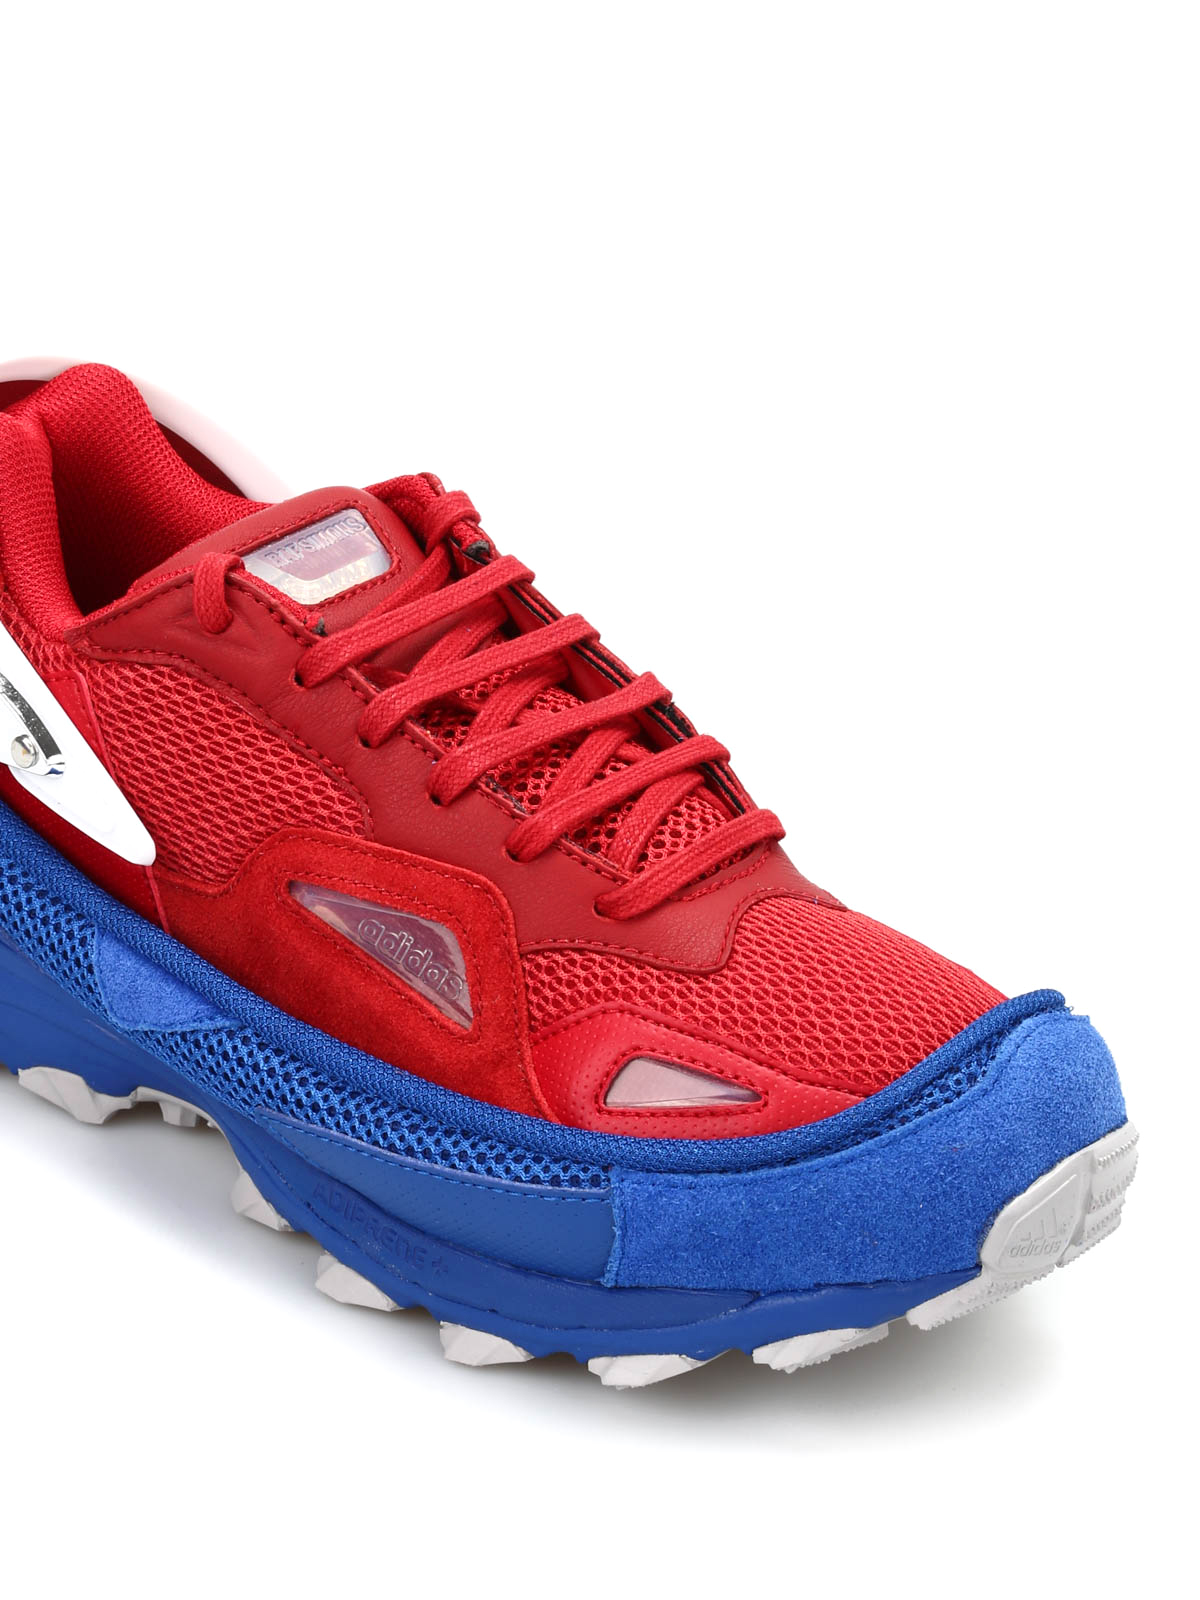 Trainers Adidas Originals - Raf Response Trail sneakers - AQ2648POWREDCROYALCGRANI